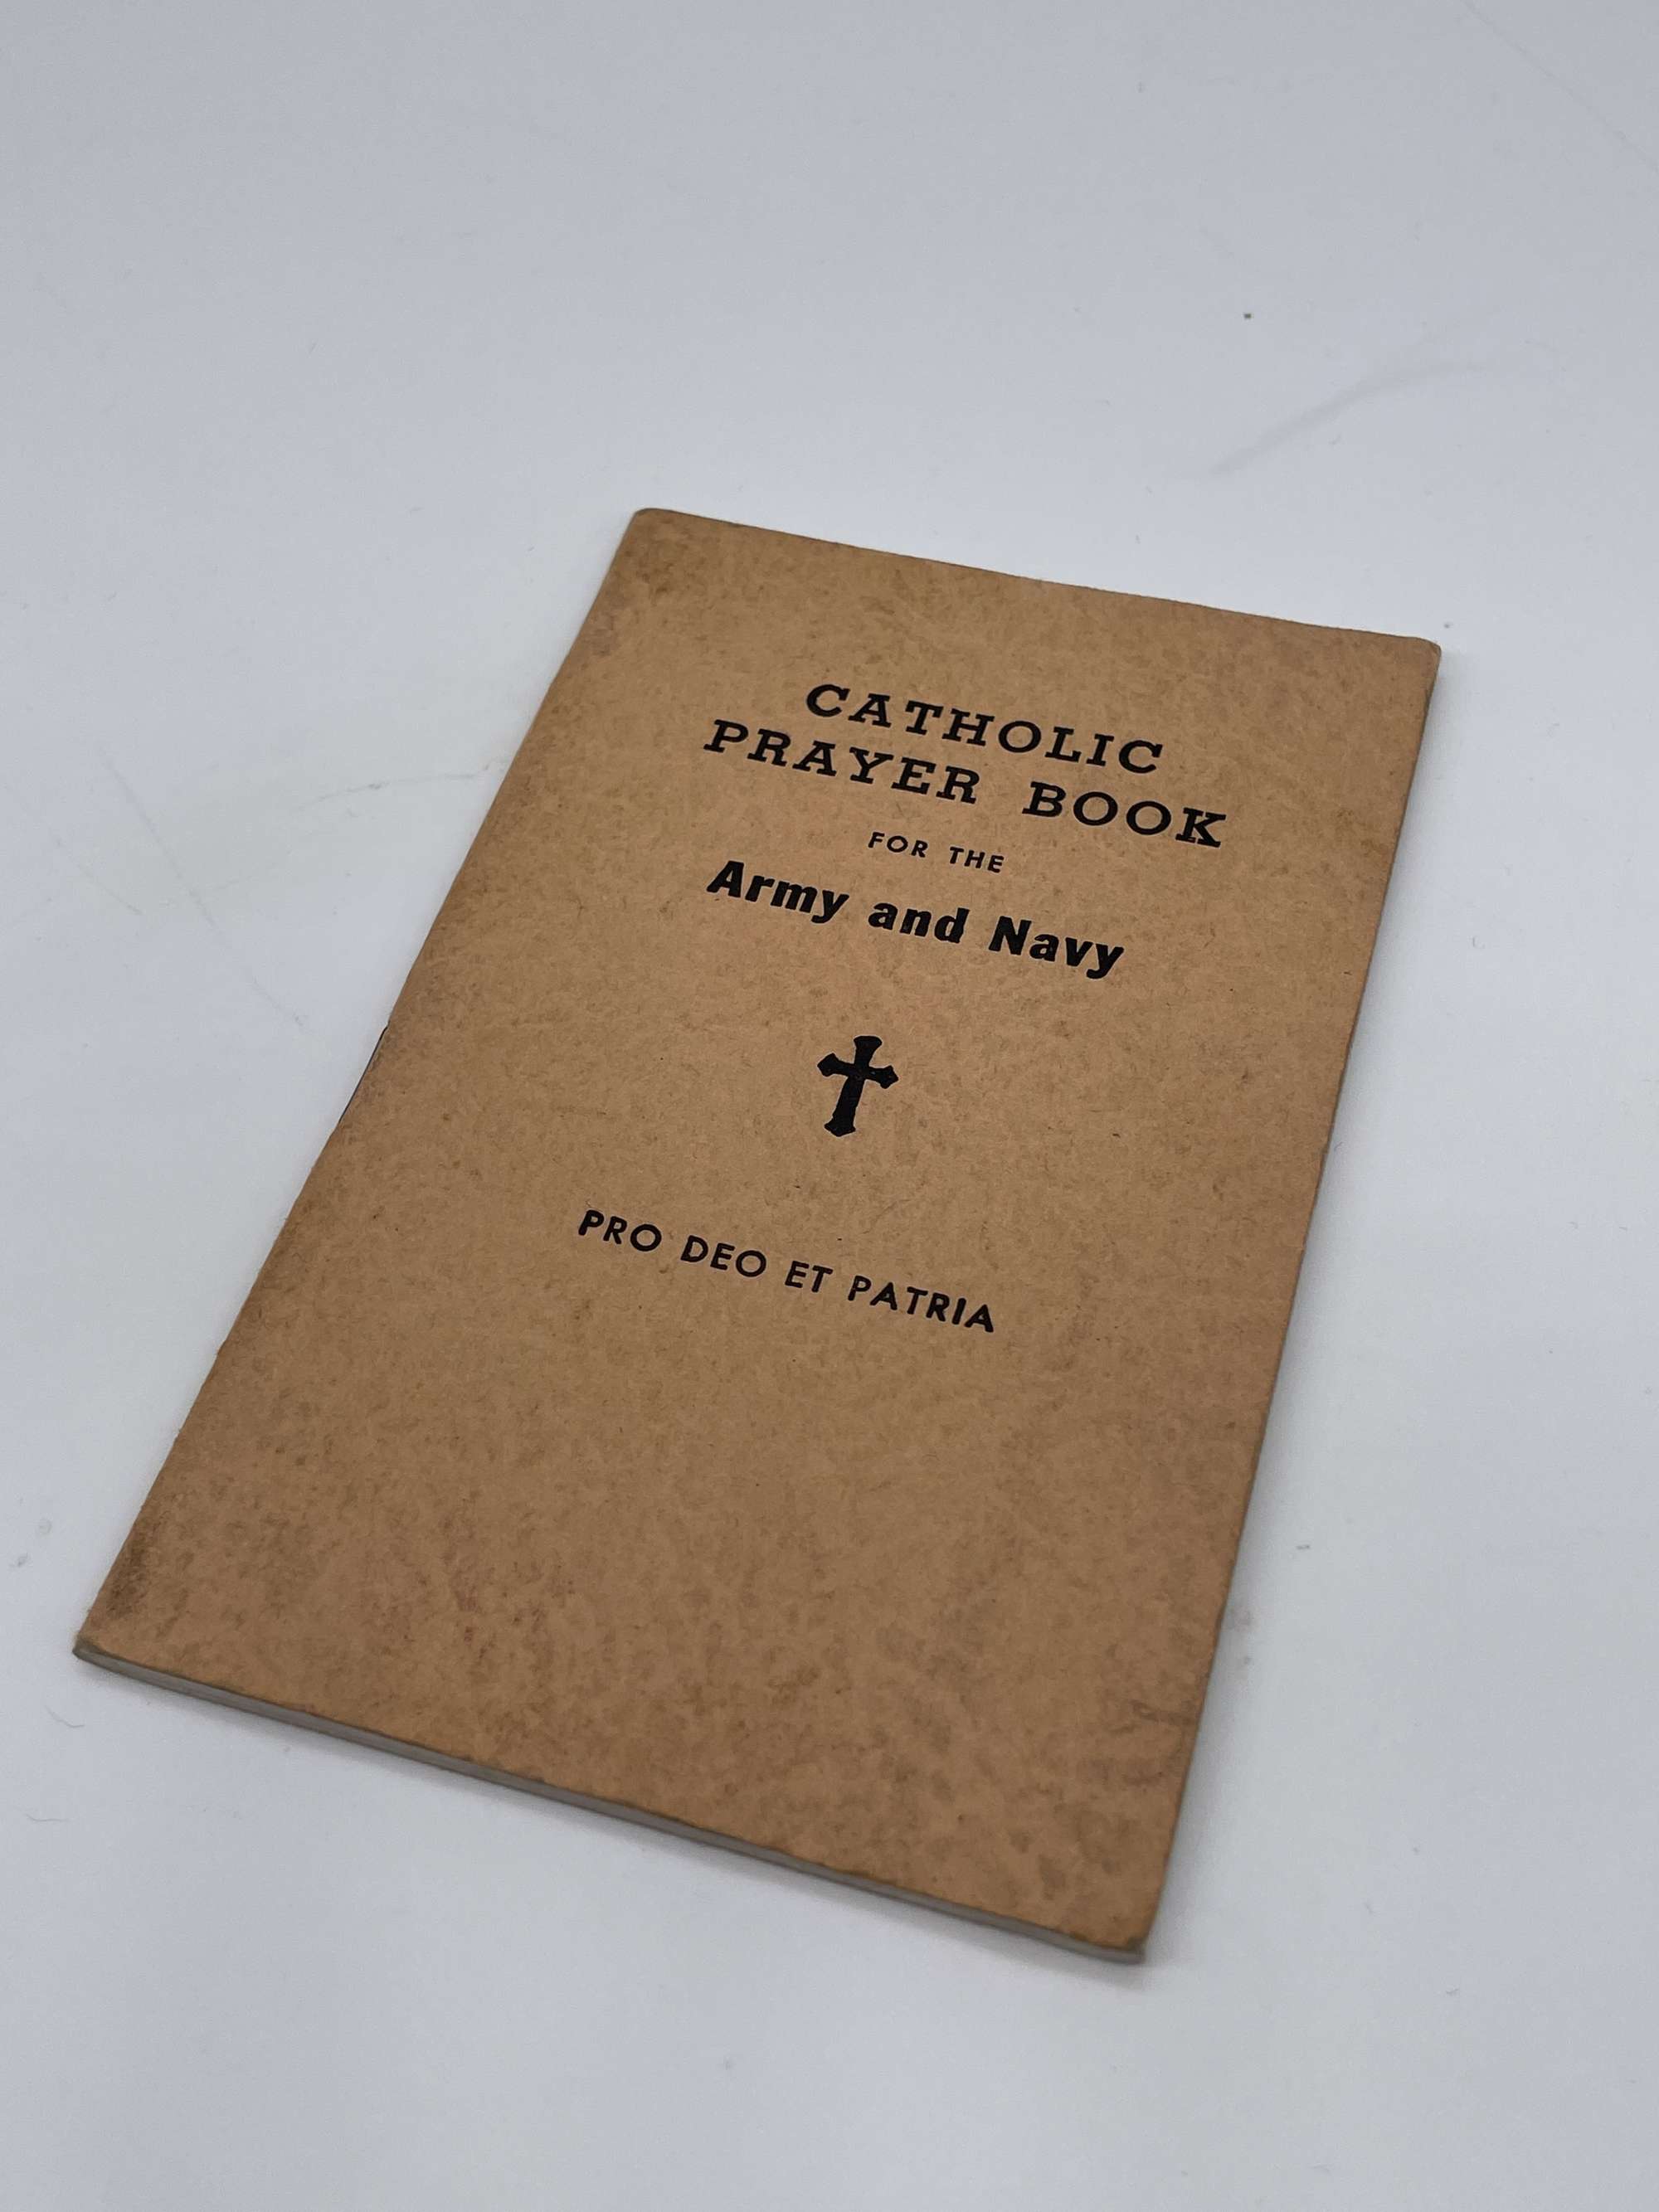 Original World War One American Army/Navy Catholic Prayer Book, 1917 Dated